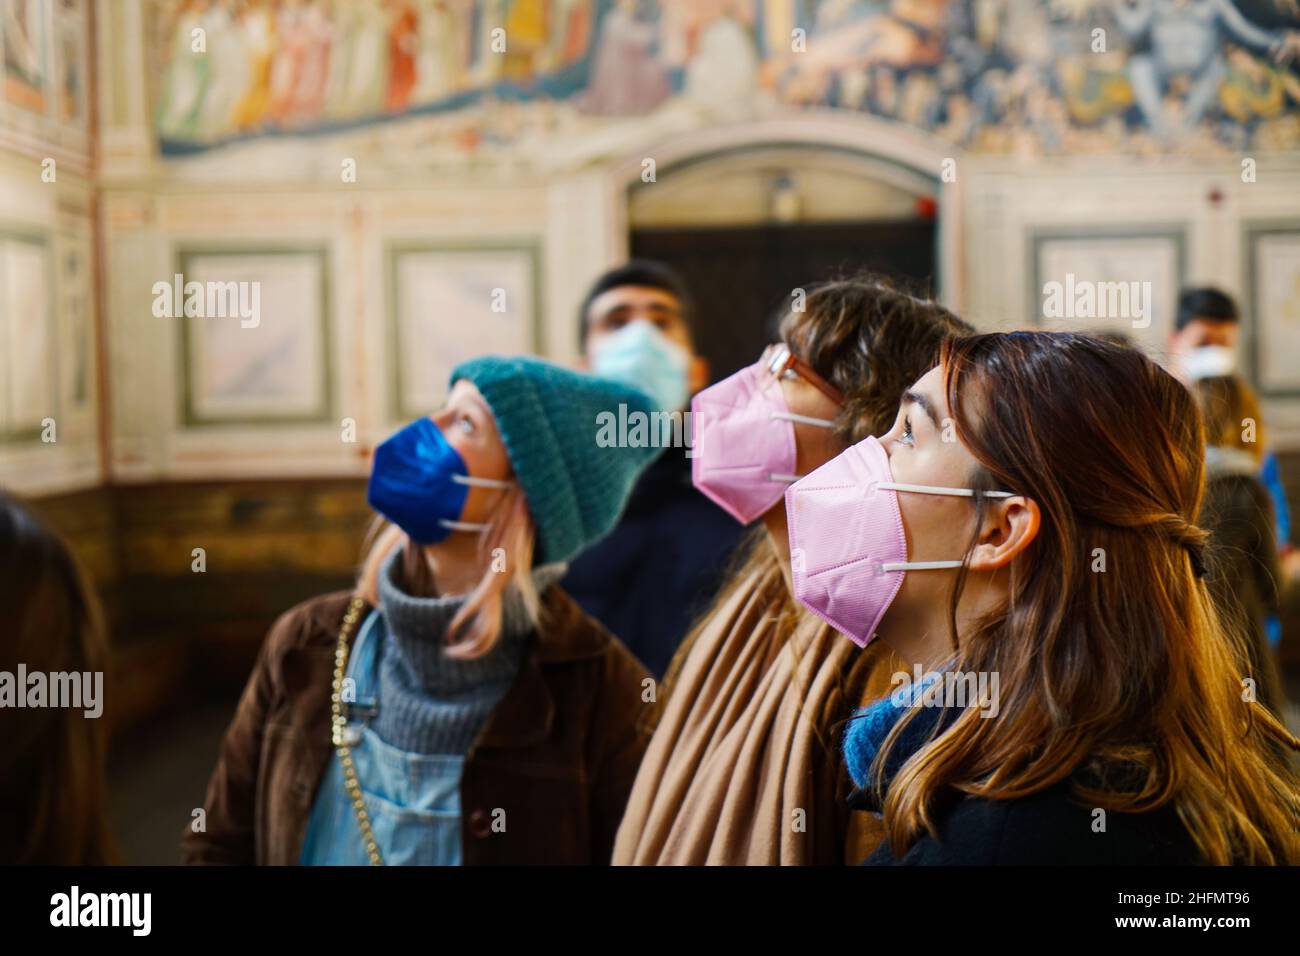 Junge weibliche Besucher tragen Anti-Covid-Masken in der Scrovegni-Kapelle. Padua, Italien - Januar 2022 Stockfoto